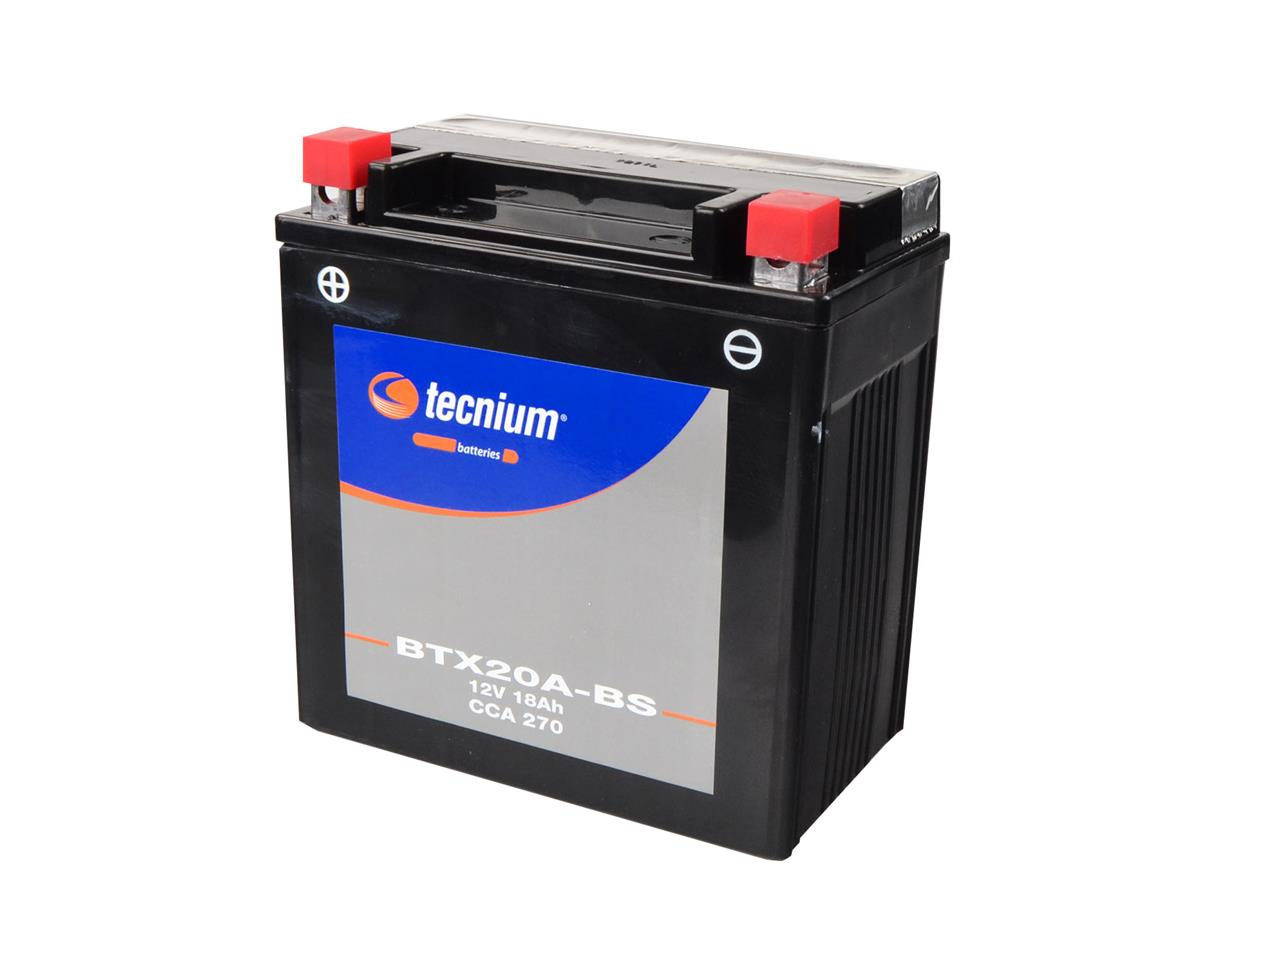 Batterie moto lithium 12v Skyrich Ion LTX30LHQ